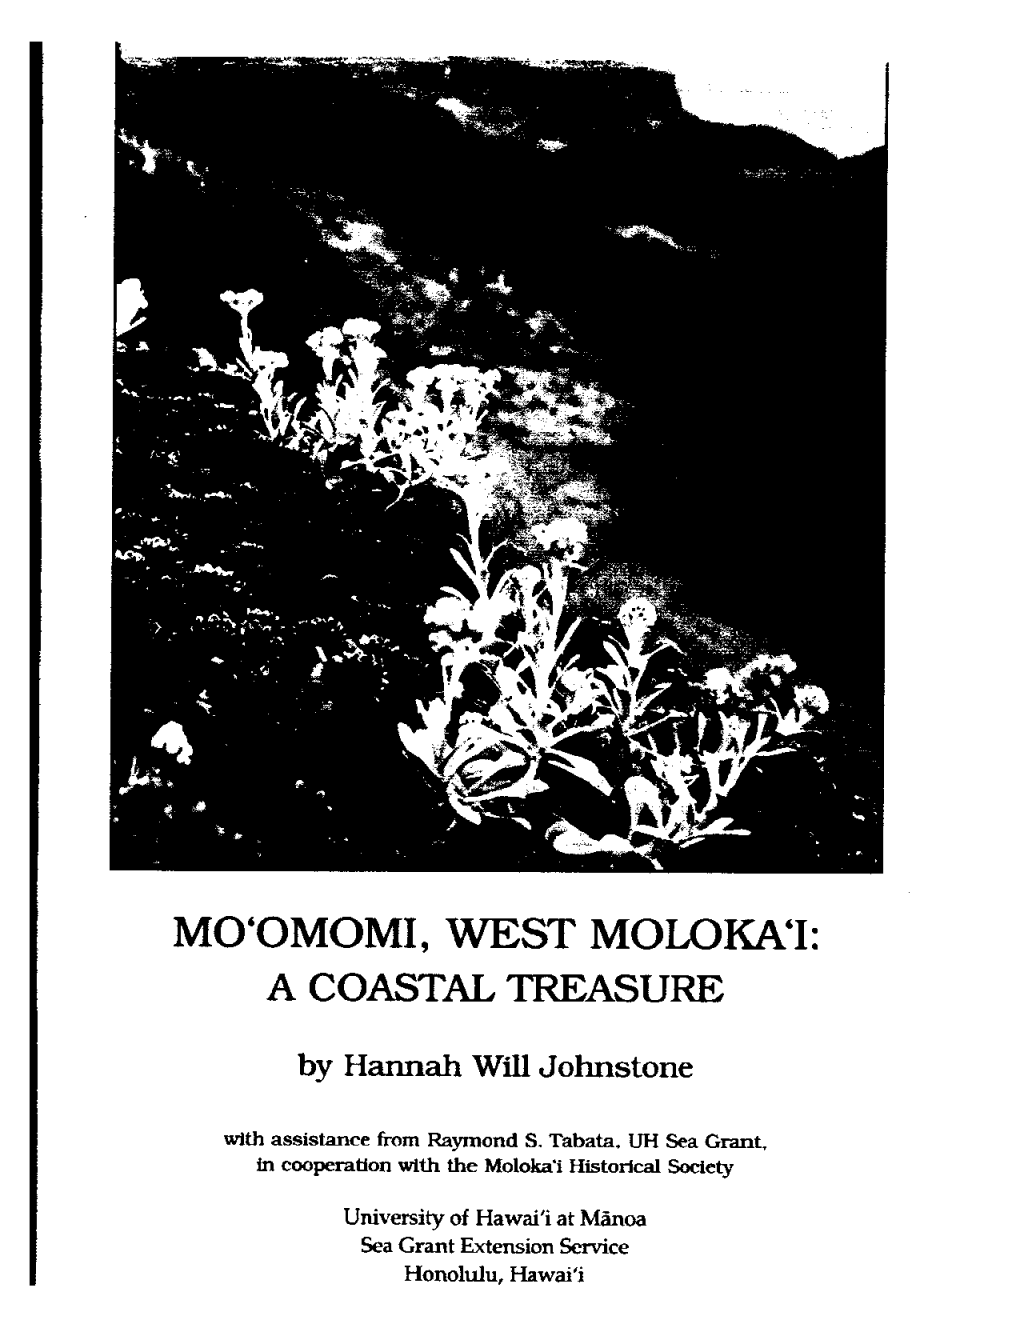 Coastal Plants of Mo'omomi